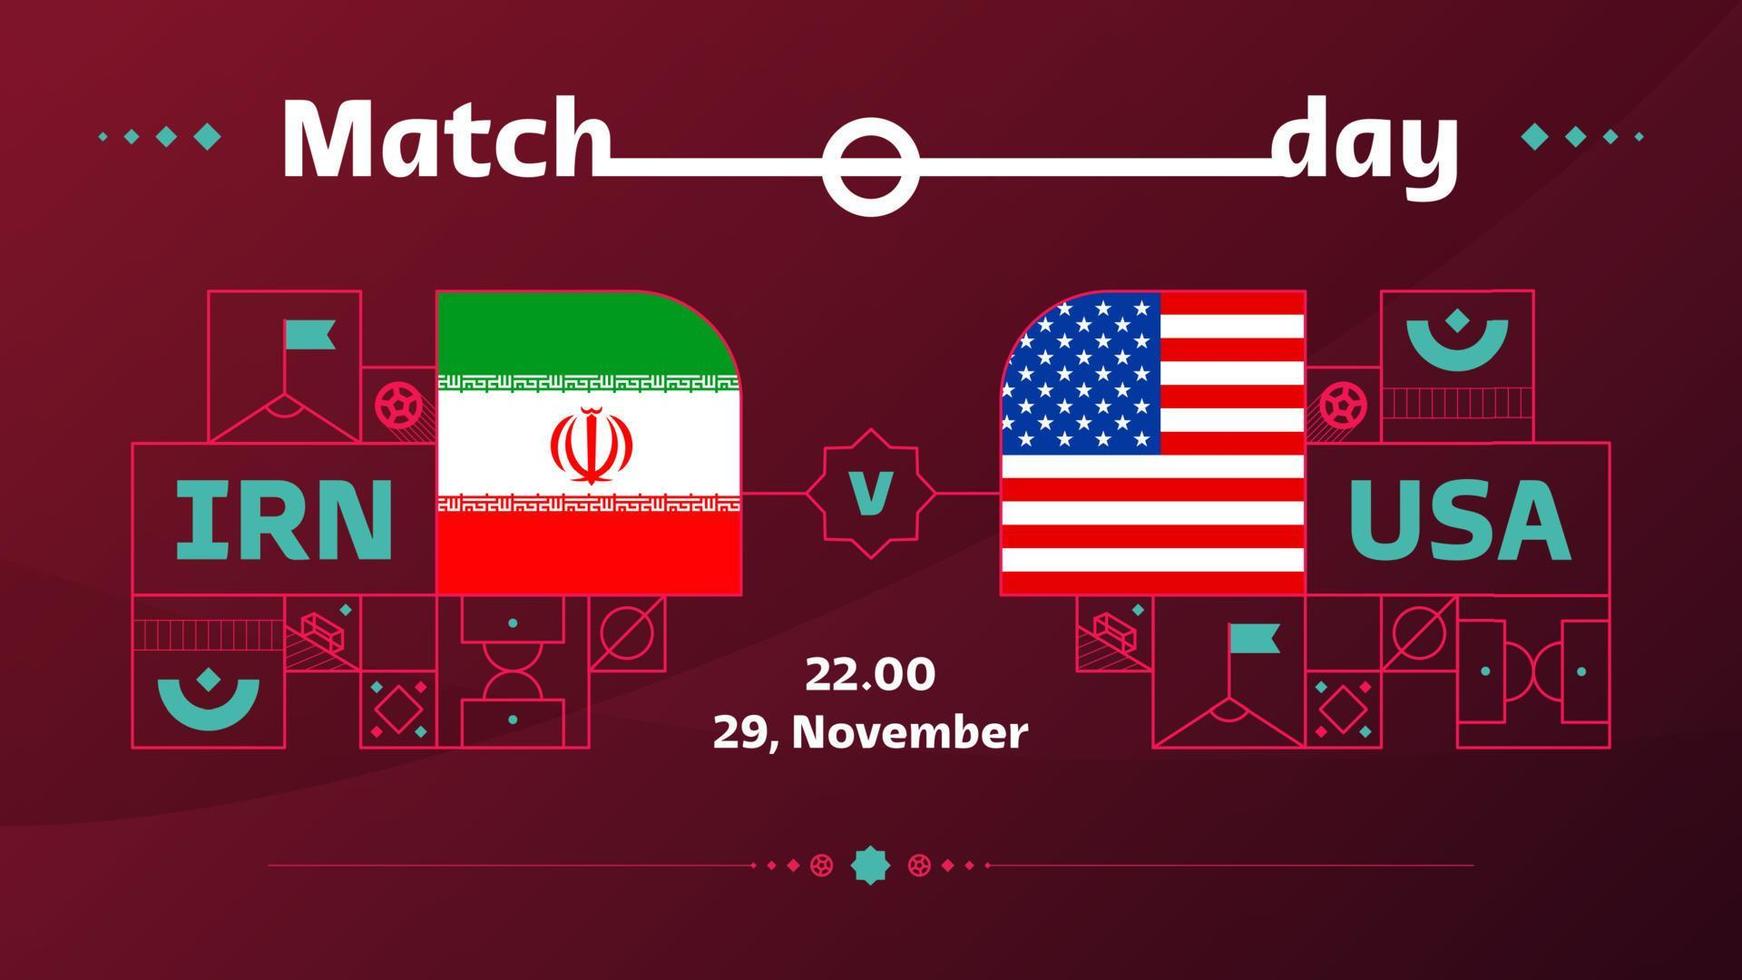 iran, usa match Football 2022. 2022 World Football Competition championship match versus teams intro sport background, championship competition poster, vector illustration